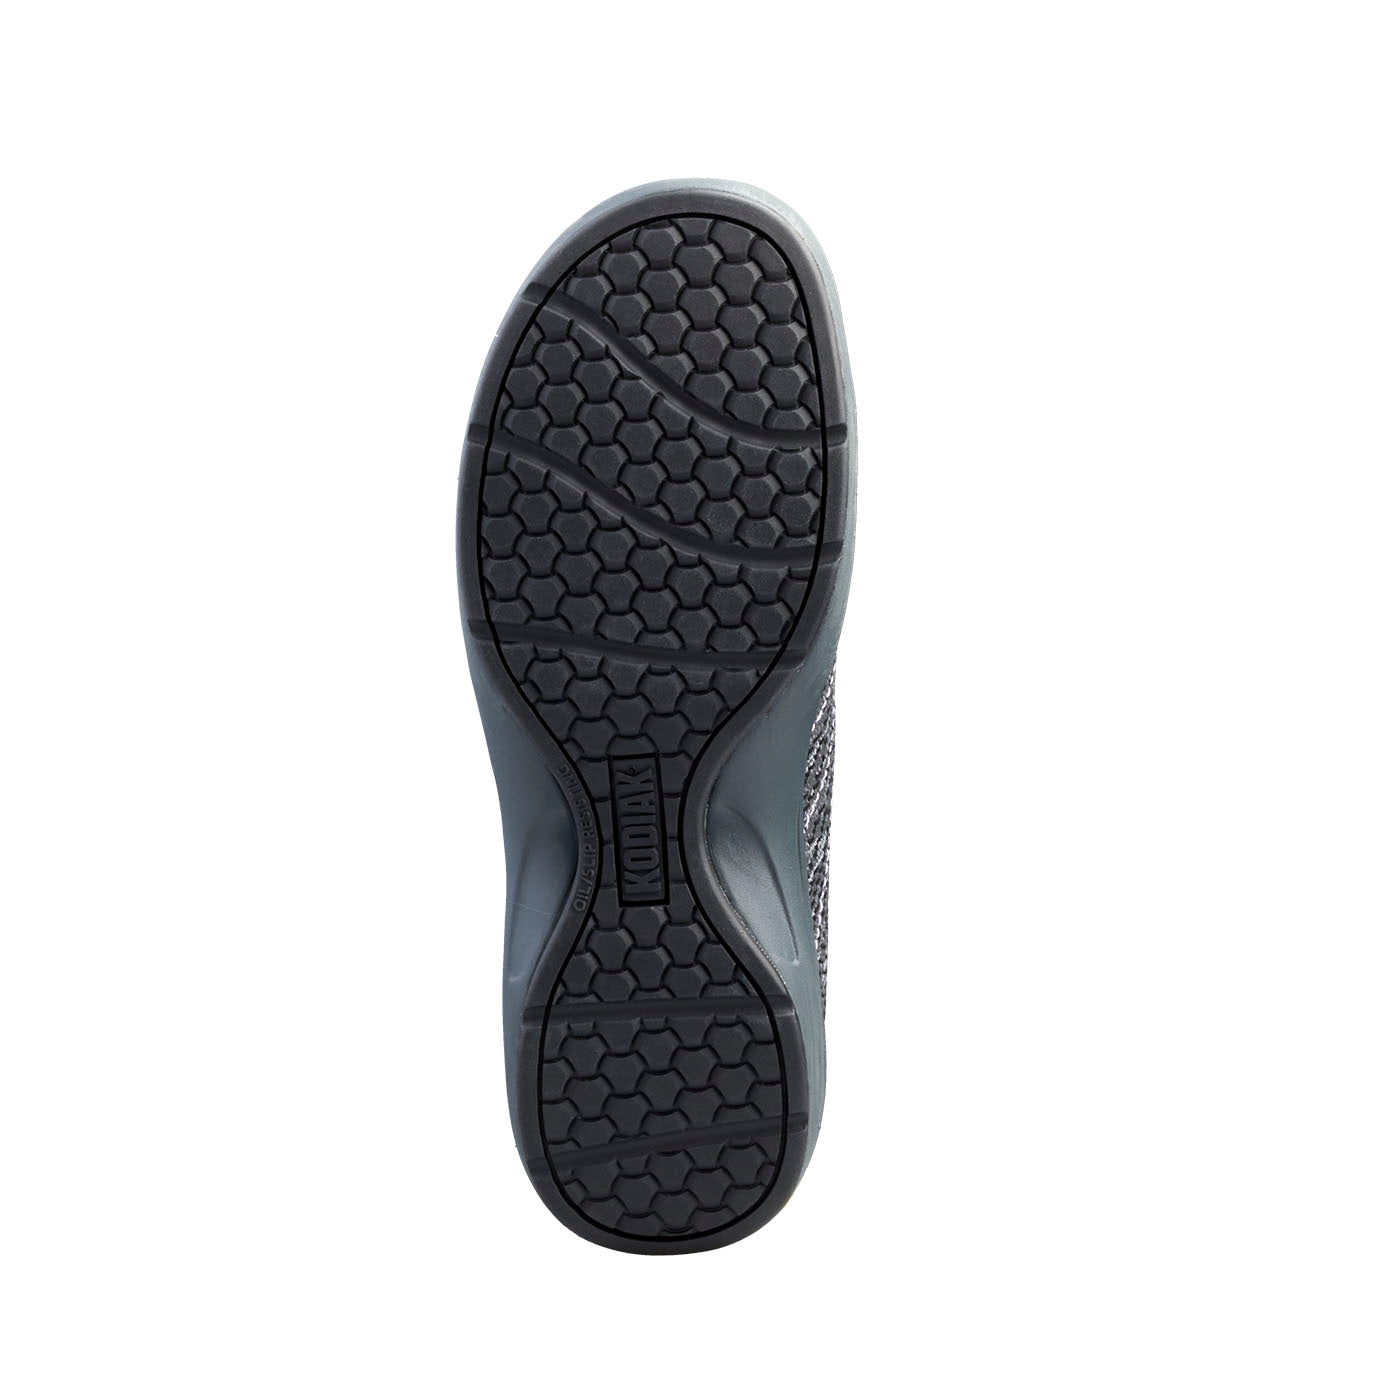 Kodiak Zora Steel Toe Flex Women's Safety Shoes | Black | Sizes 5 -10 Work Boots - Cleanflow